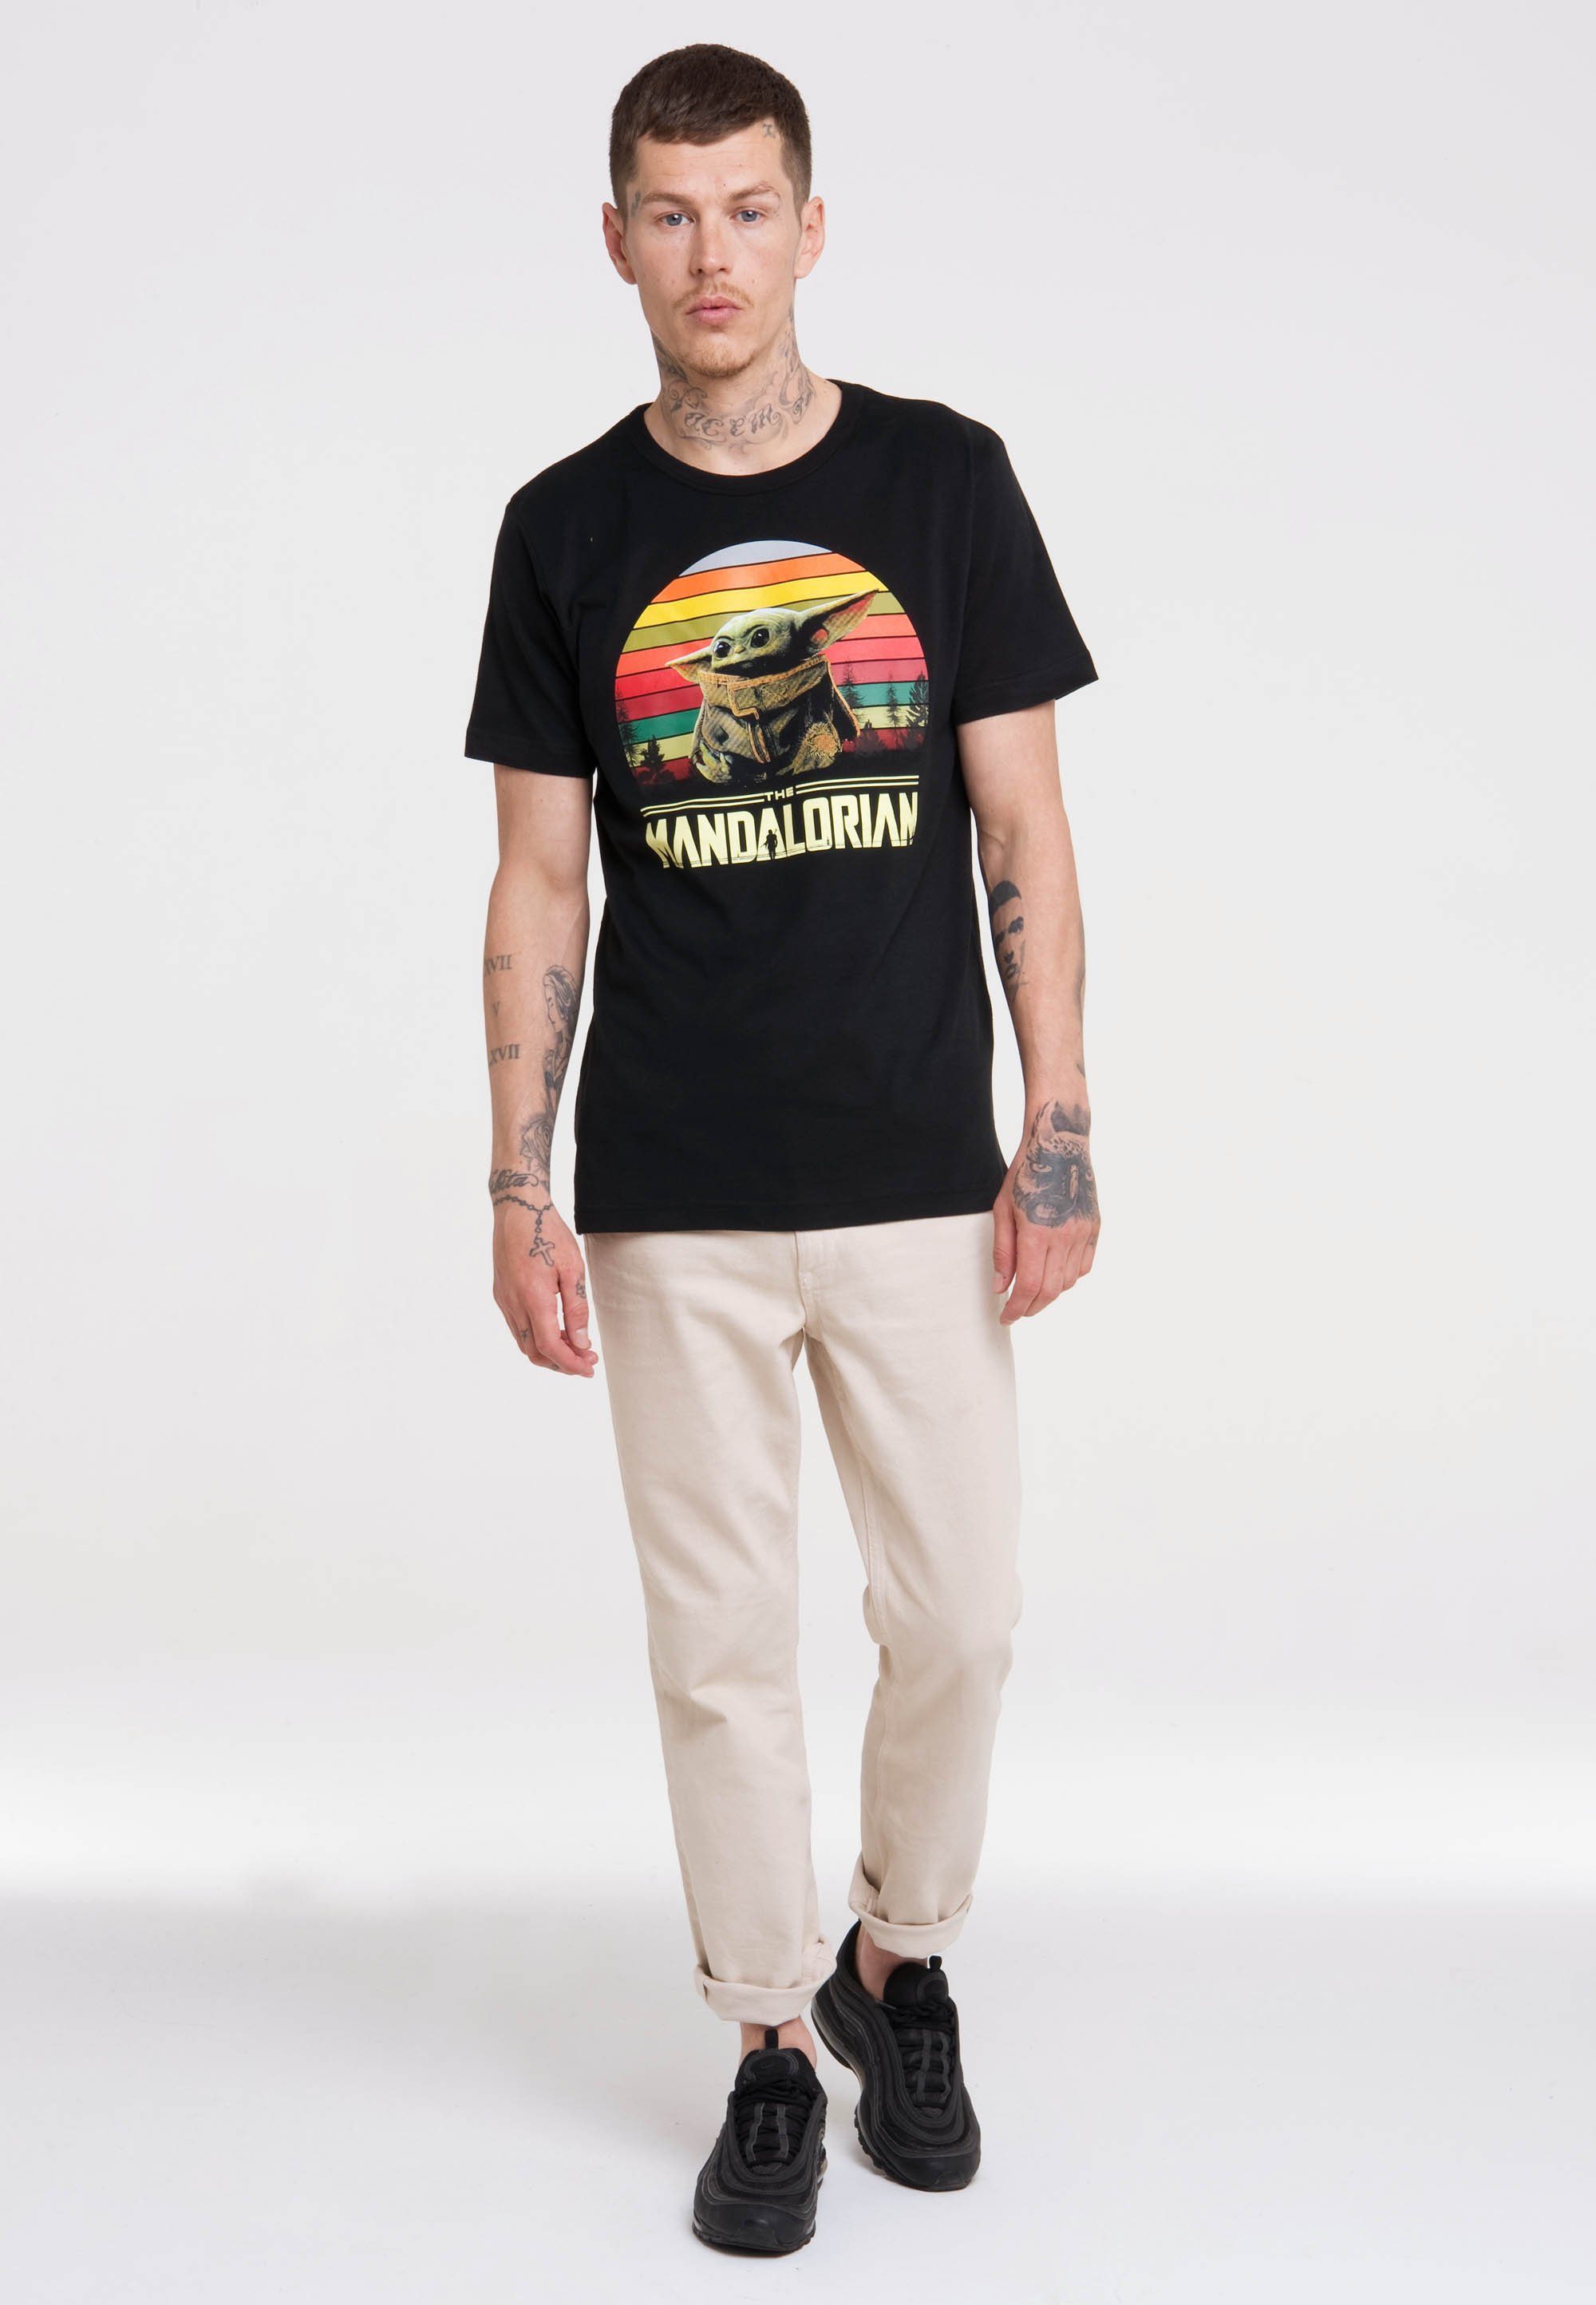 Yoda Wars Baby LOGOSHIRT – Star Print mit lizenziertem T-Shirt